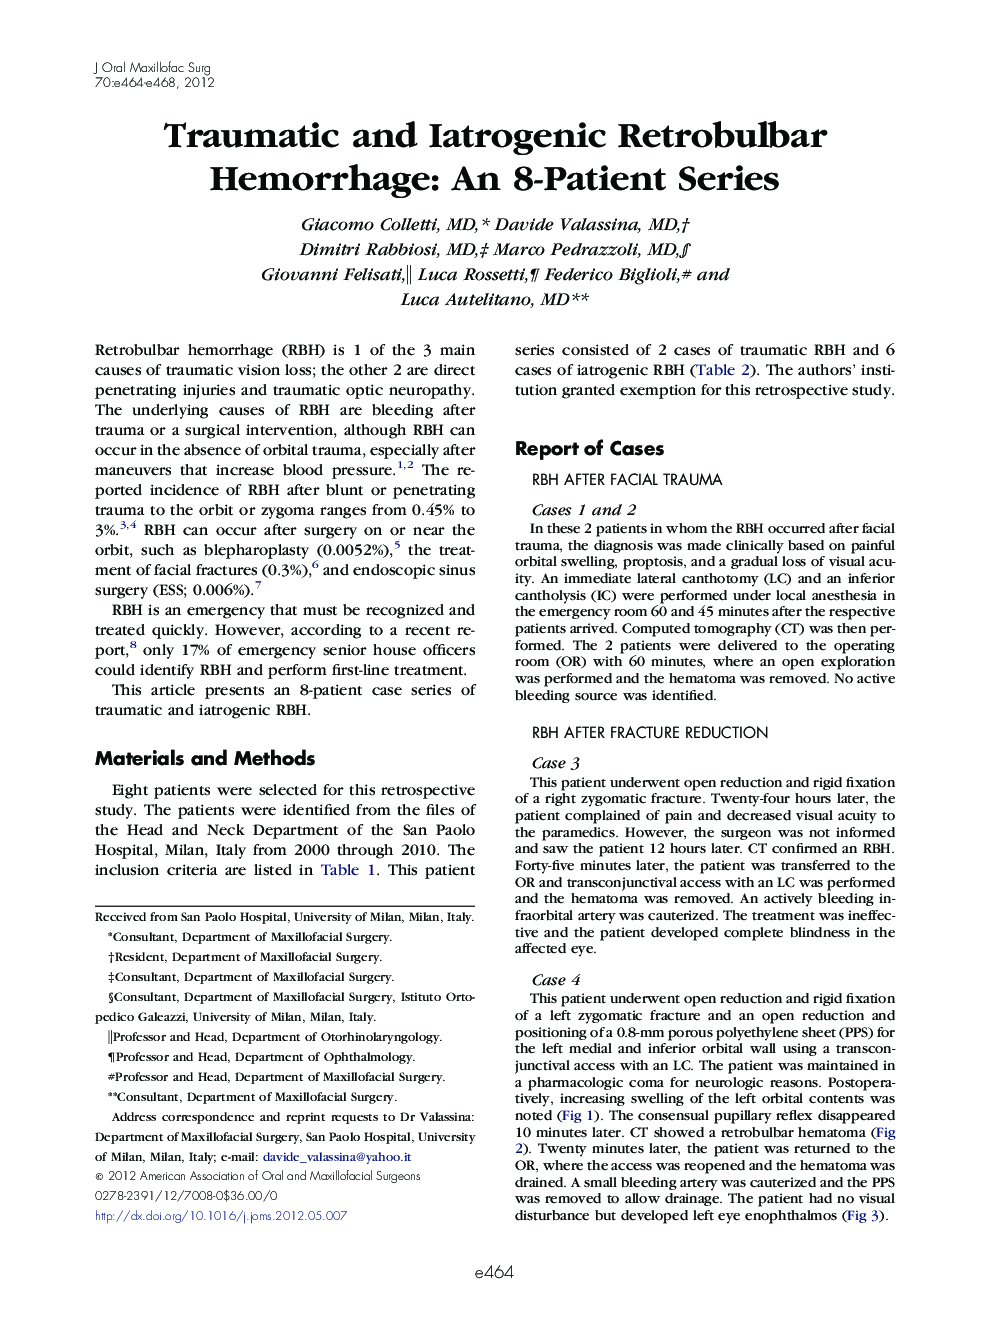 Traumatic and Iatrogenic Retrobulbar Hemorrhage: An 8-Patient Series